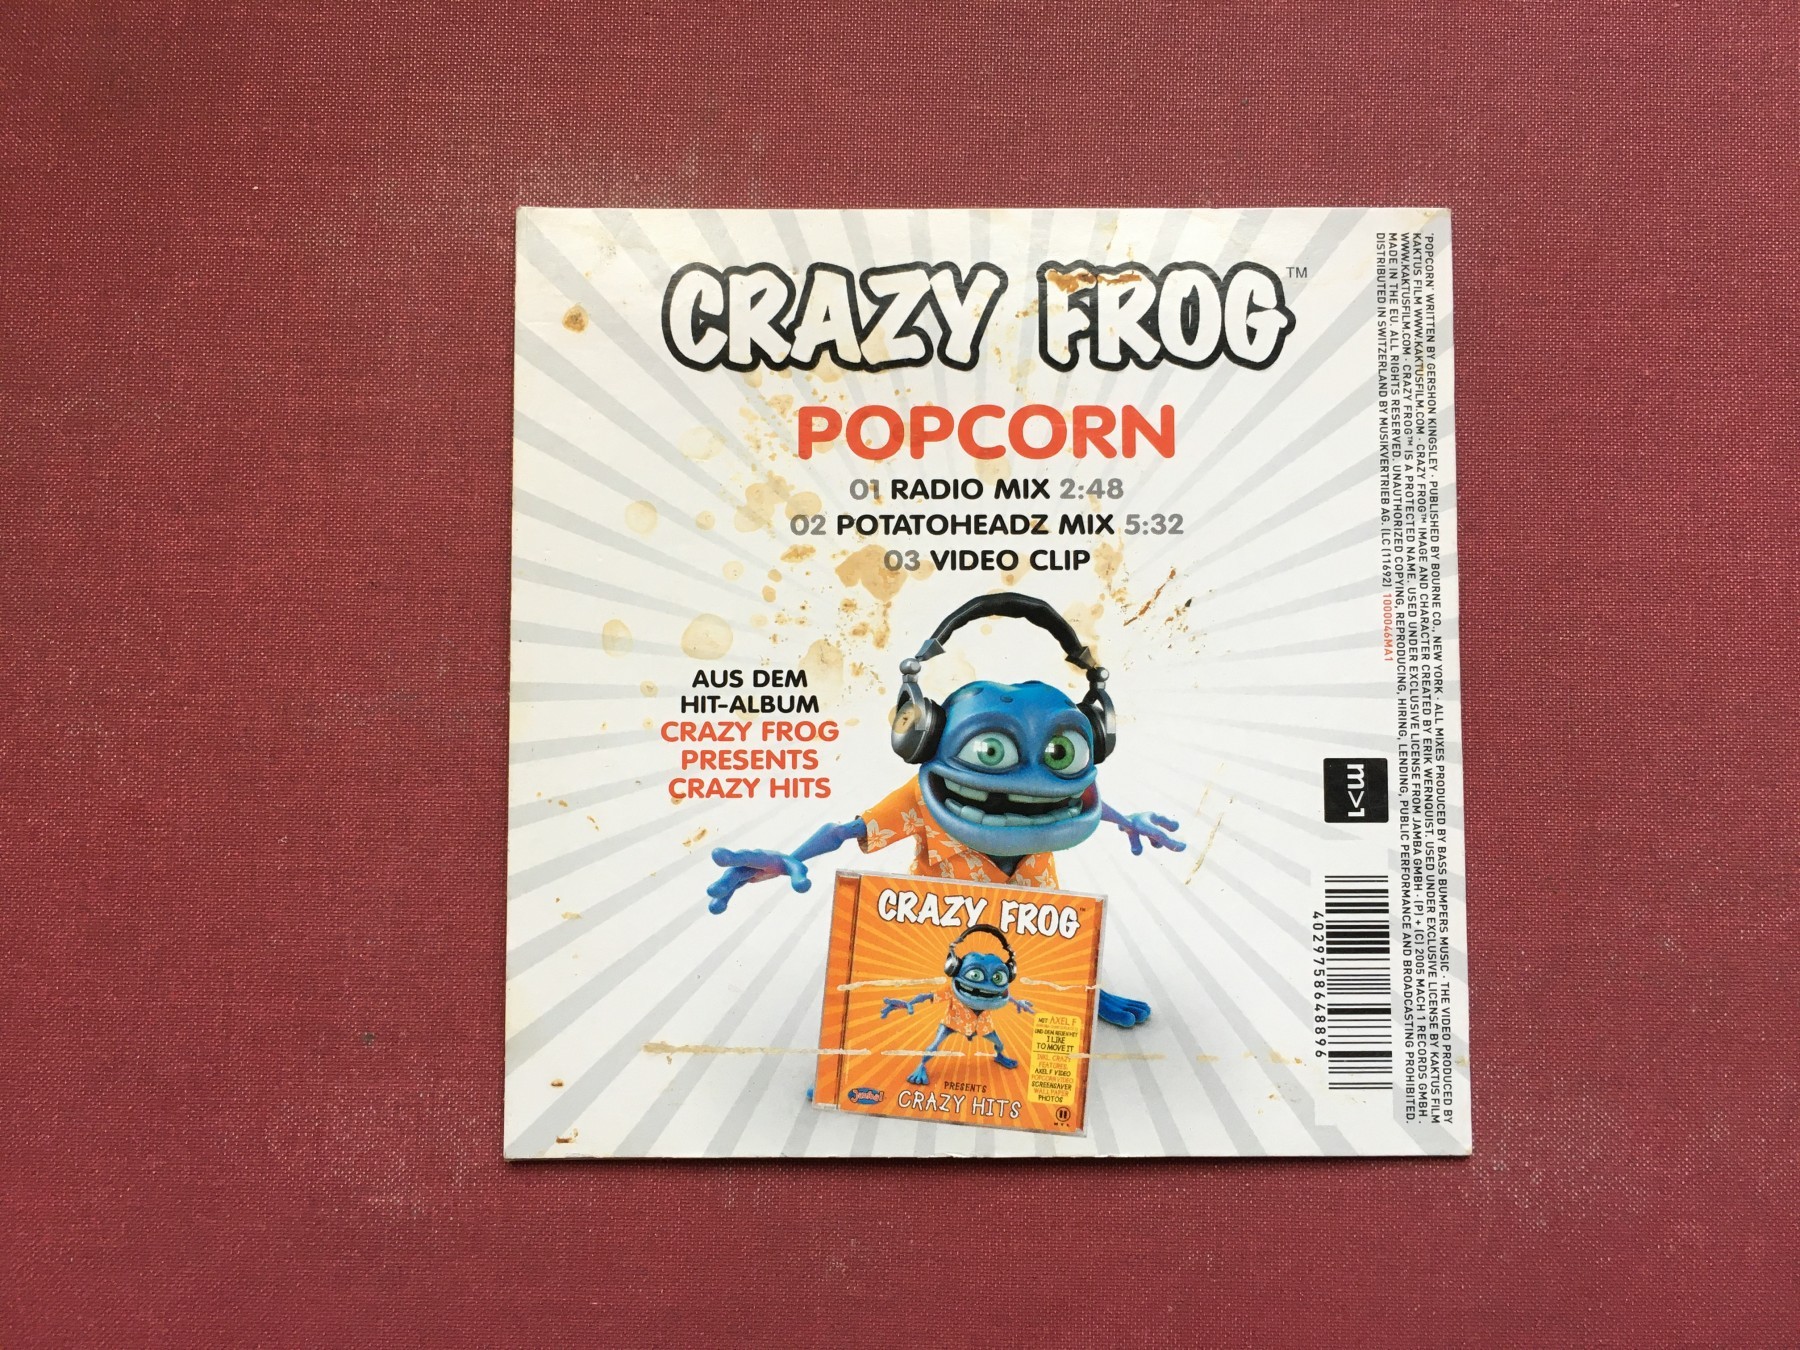 Crazy Frog - Popcorn (Official Video) 